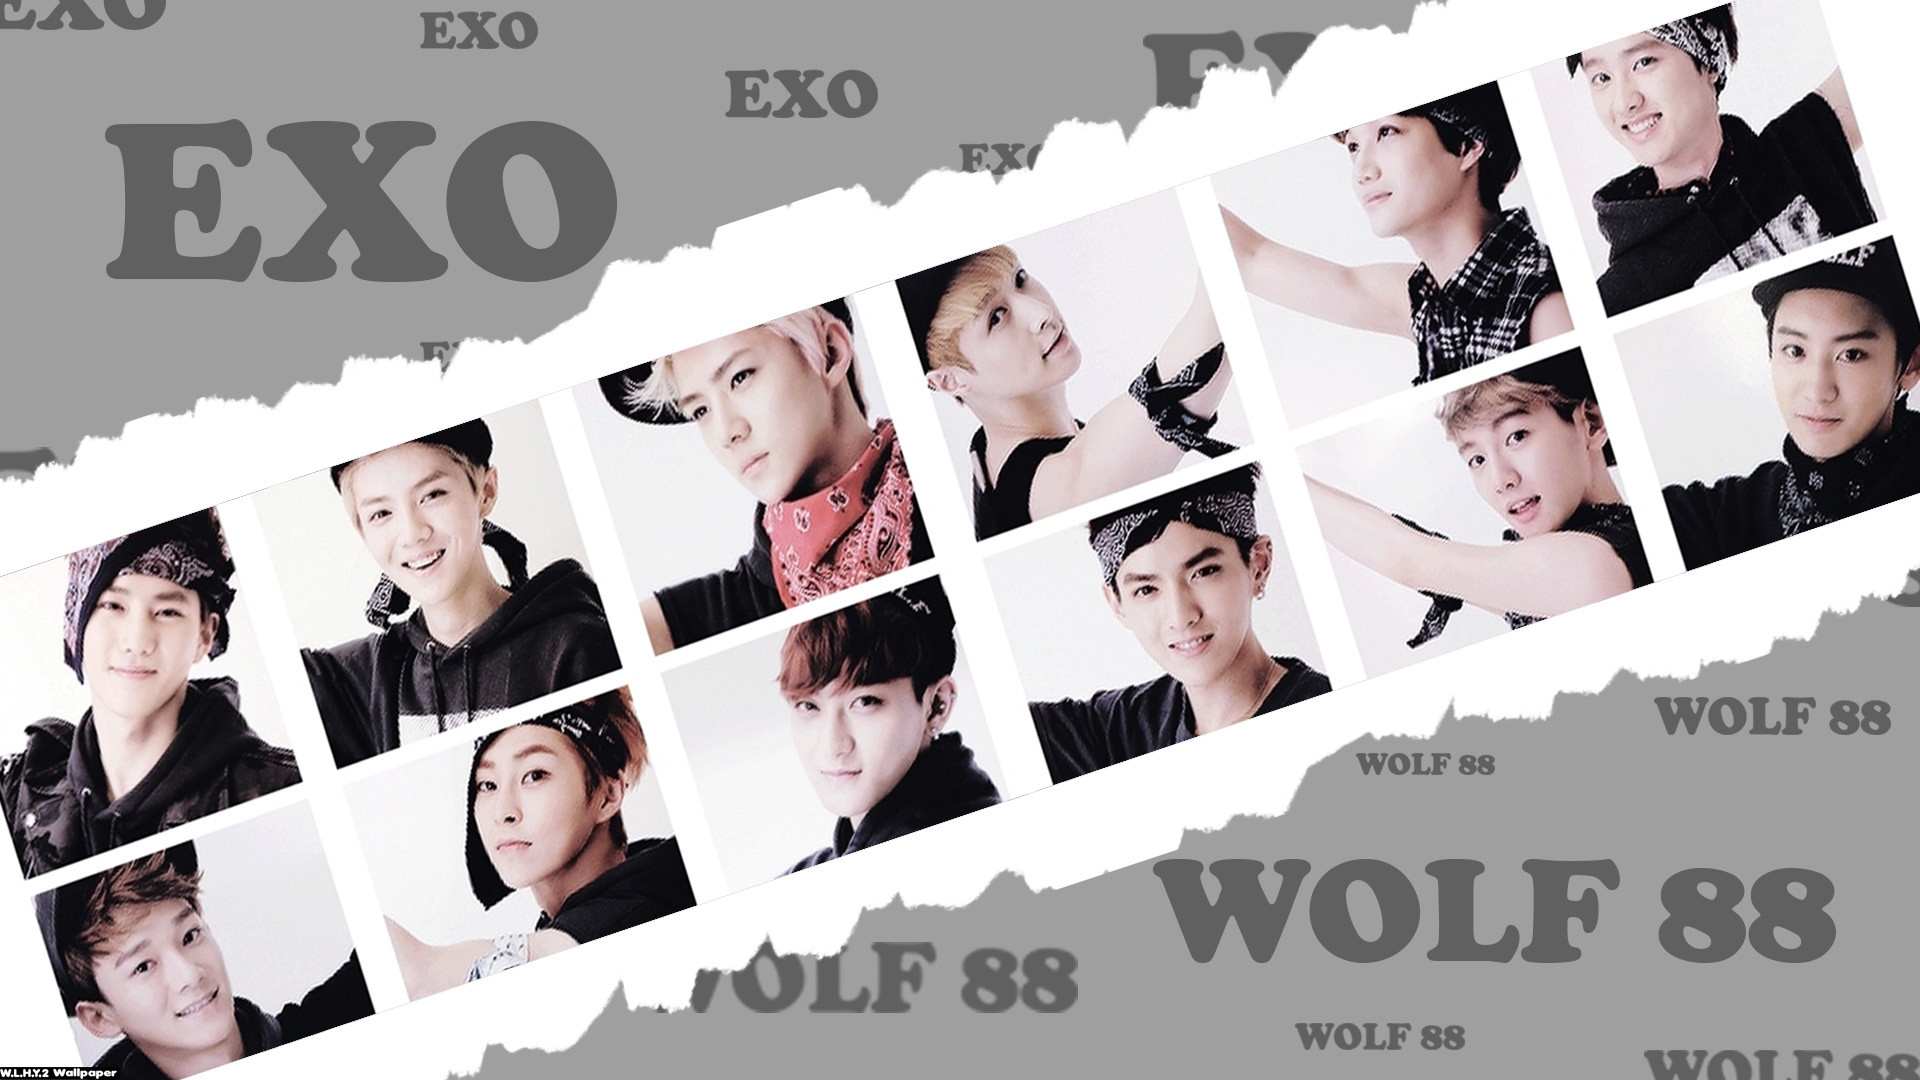 1920x1080 Tags: EXO, Sehun, Suho, Lay, Chanyeol, D.O, Kris,